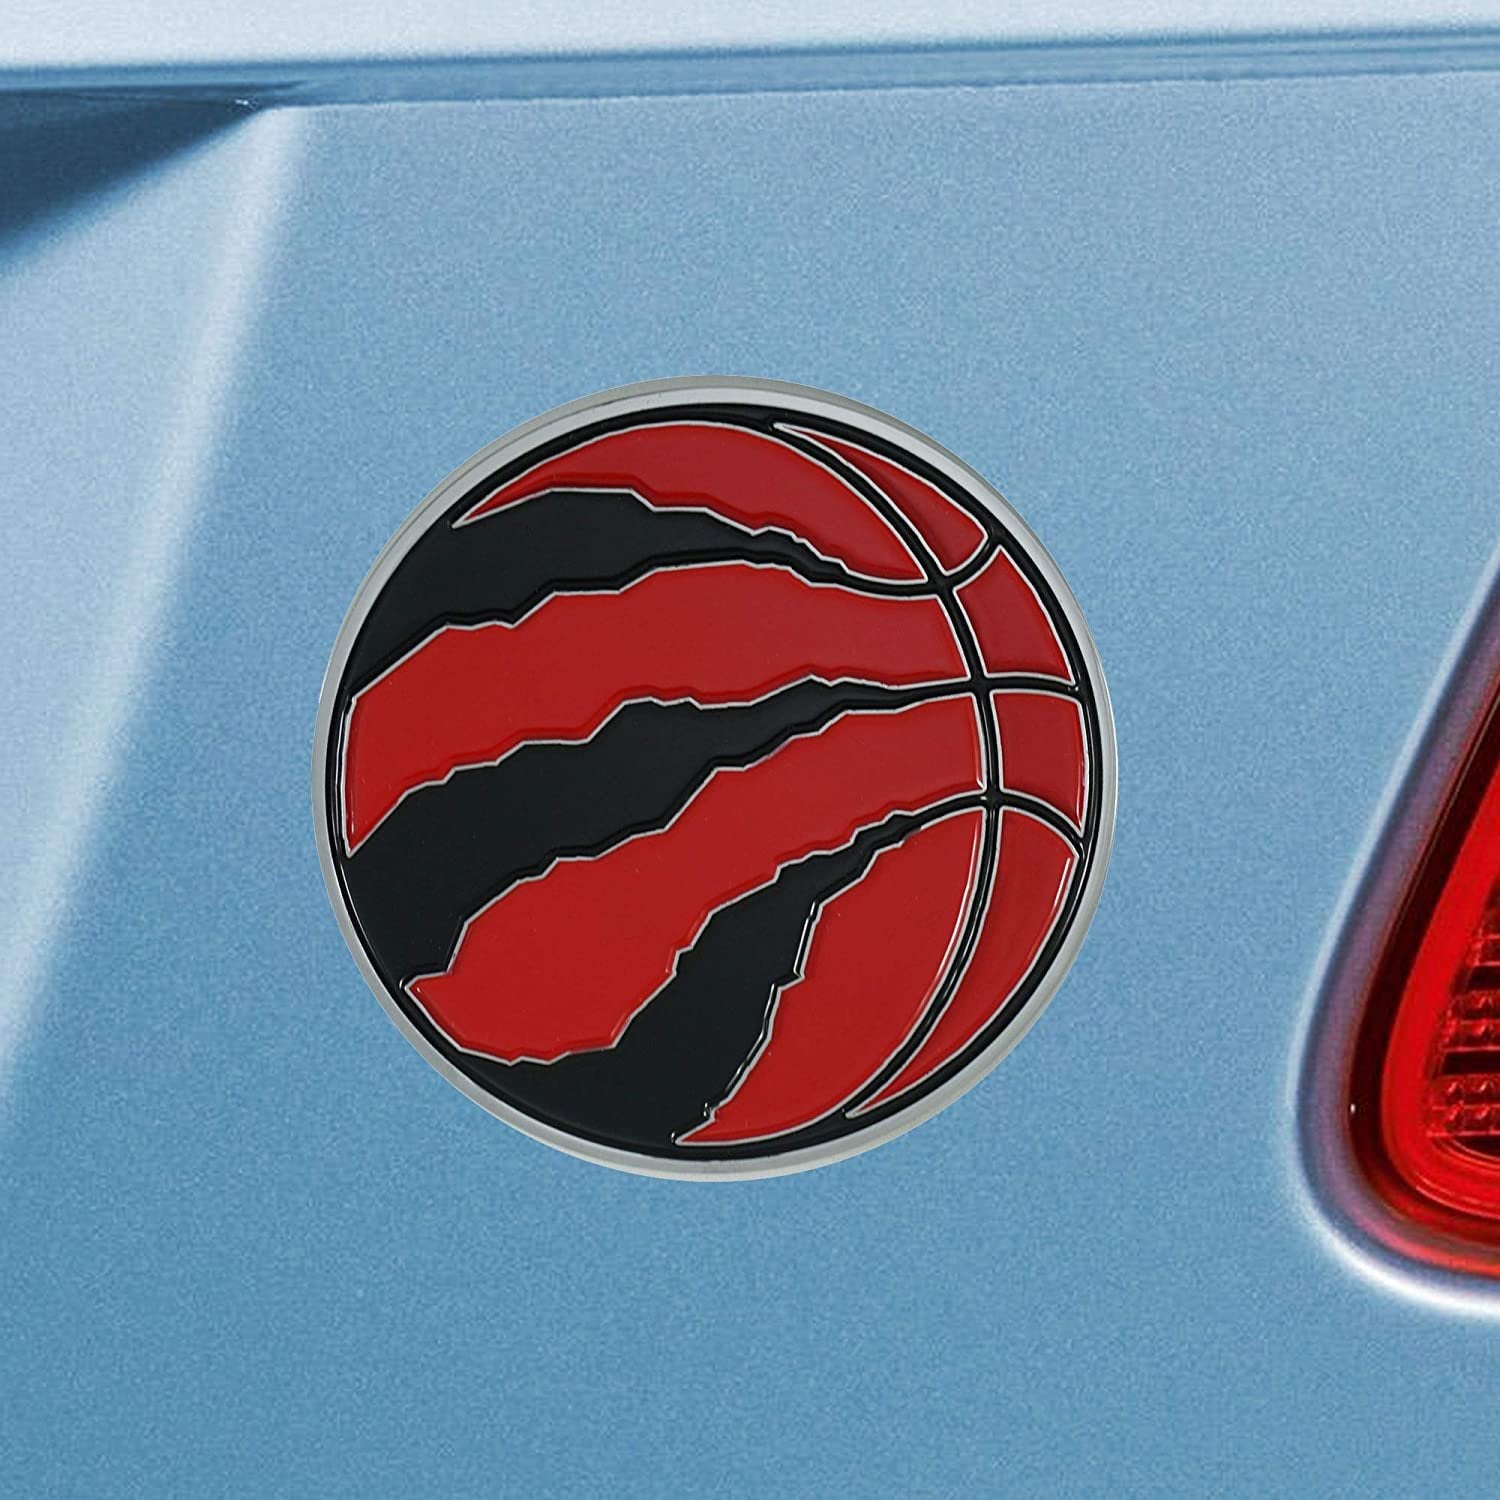 Toronto Raptors Premium Solid Metal Raised Auto Emblem, Team Color, Shape Cut, Adhesive Backing